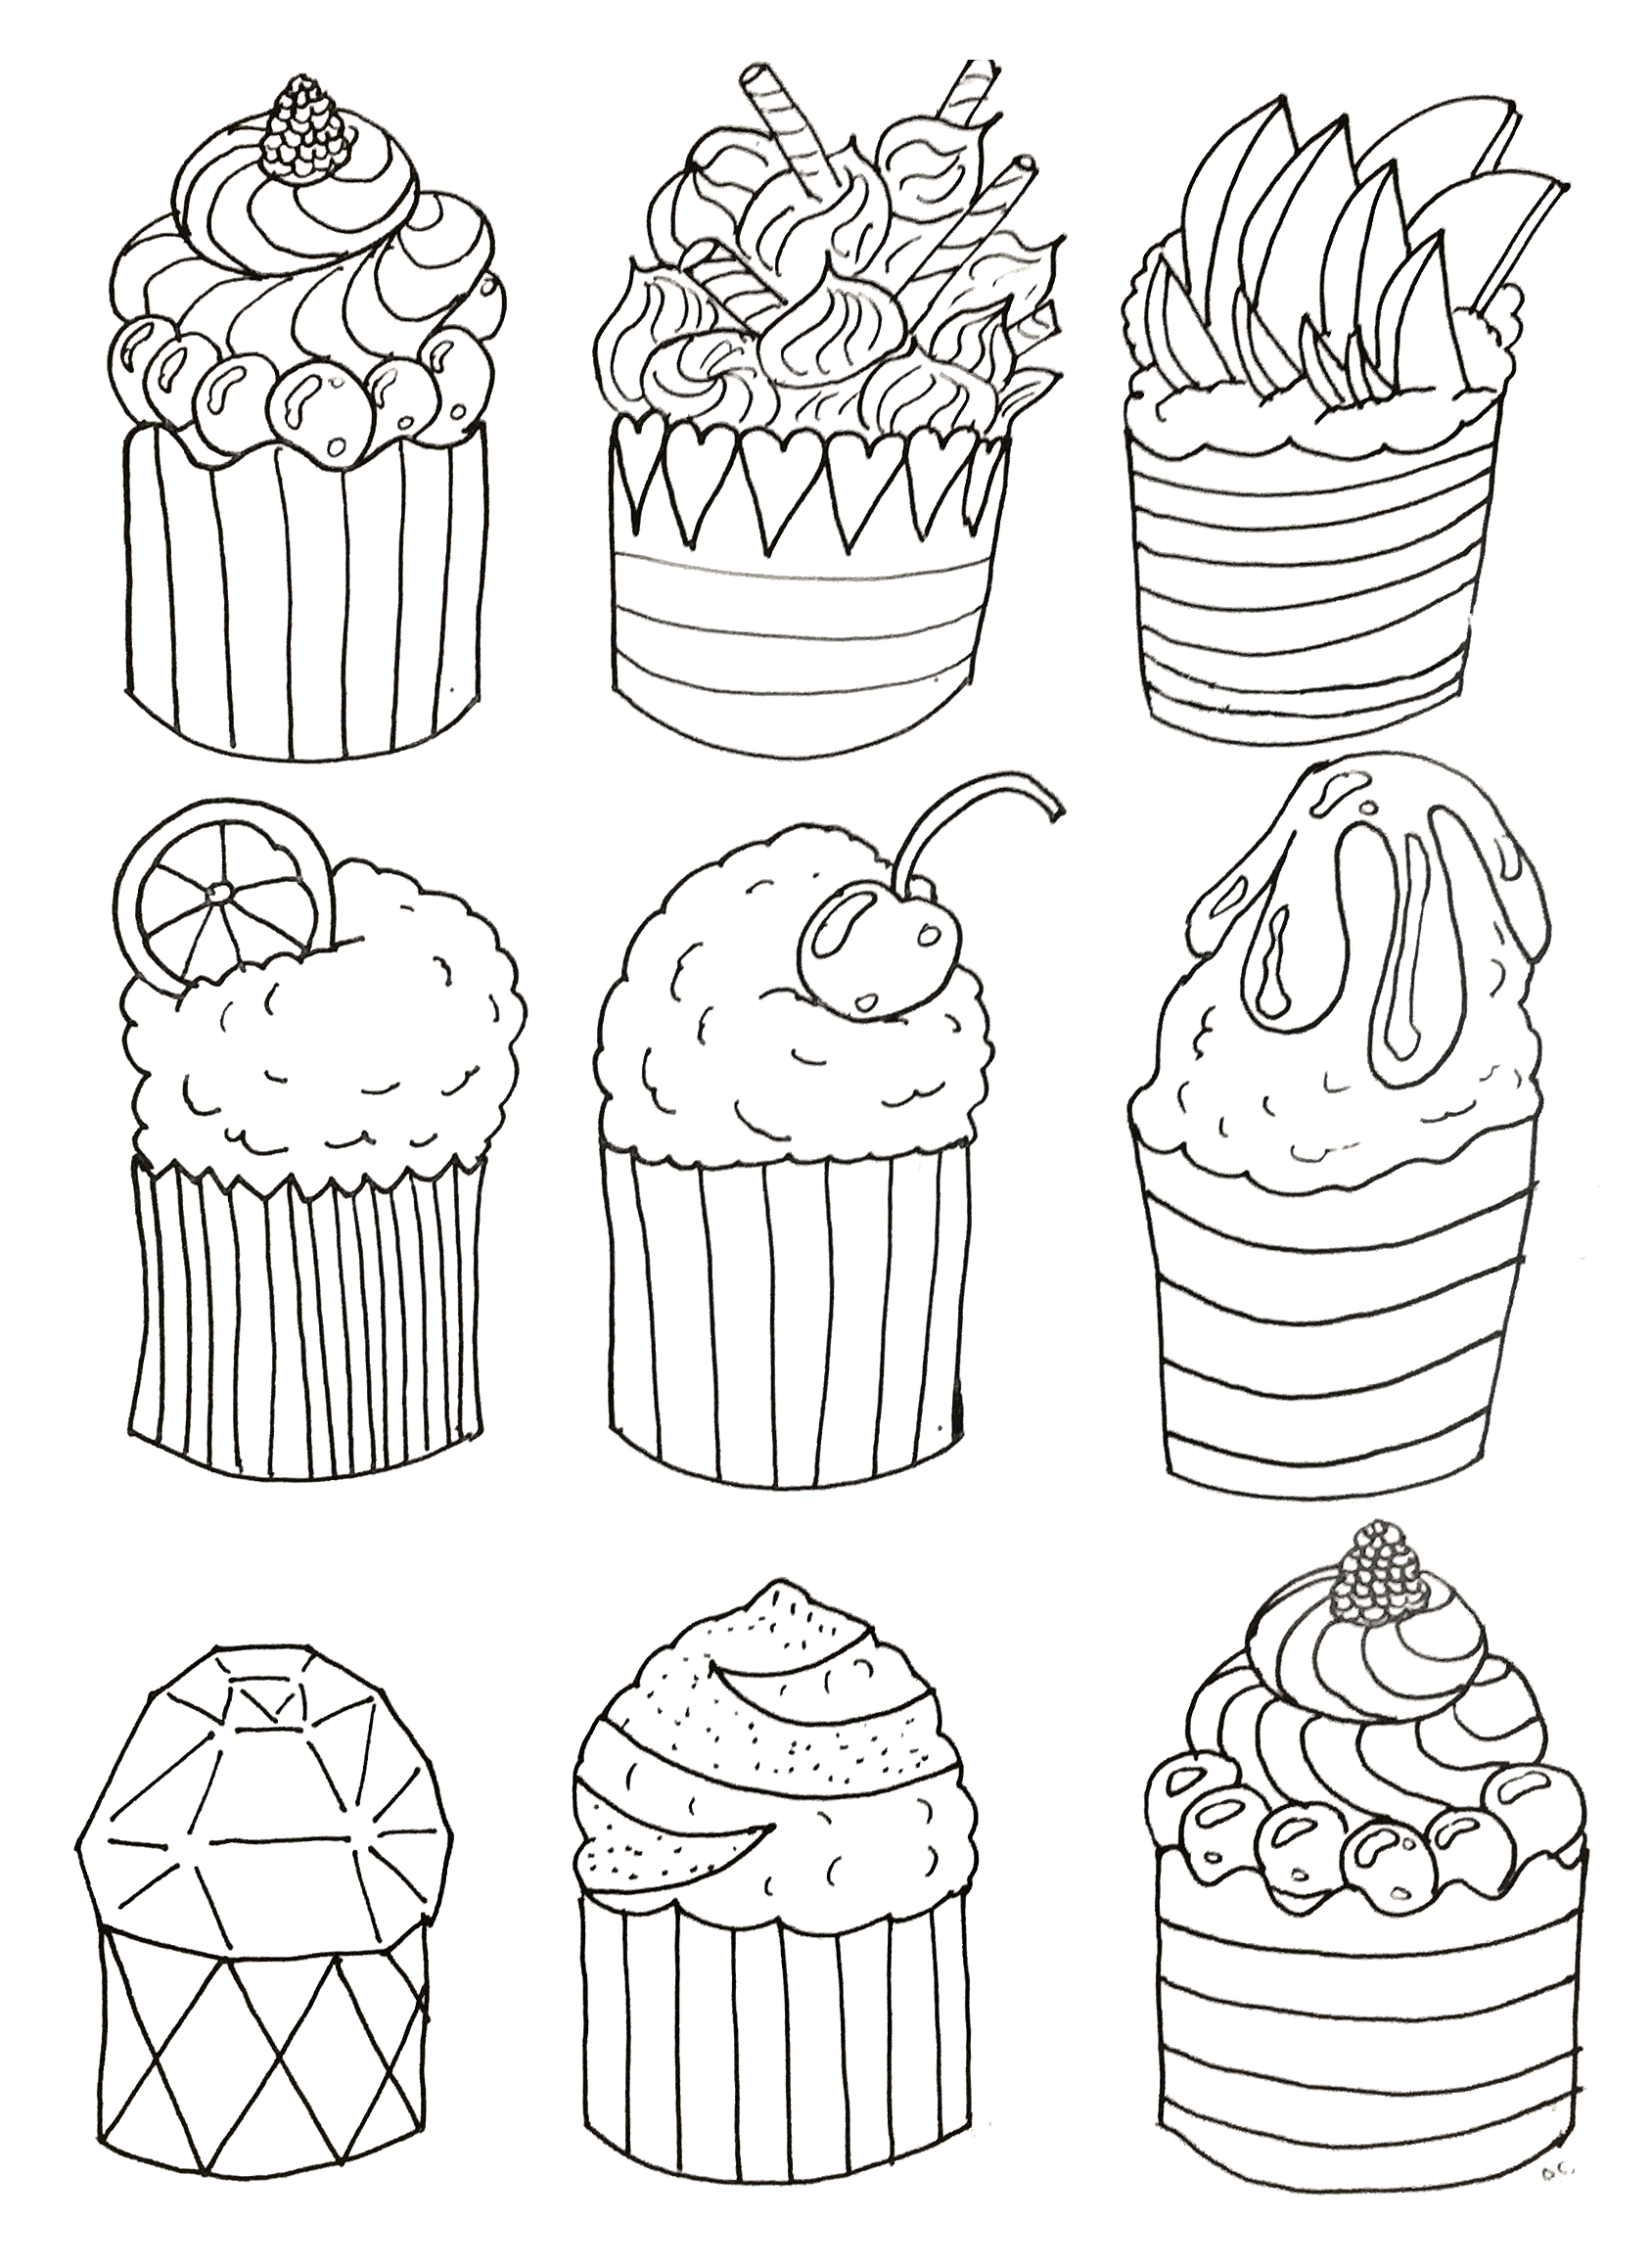 Pour simple cup cakes